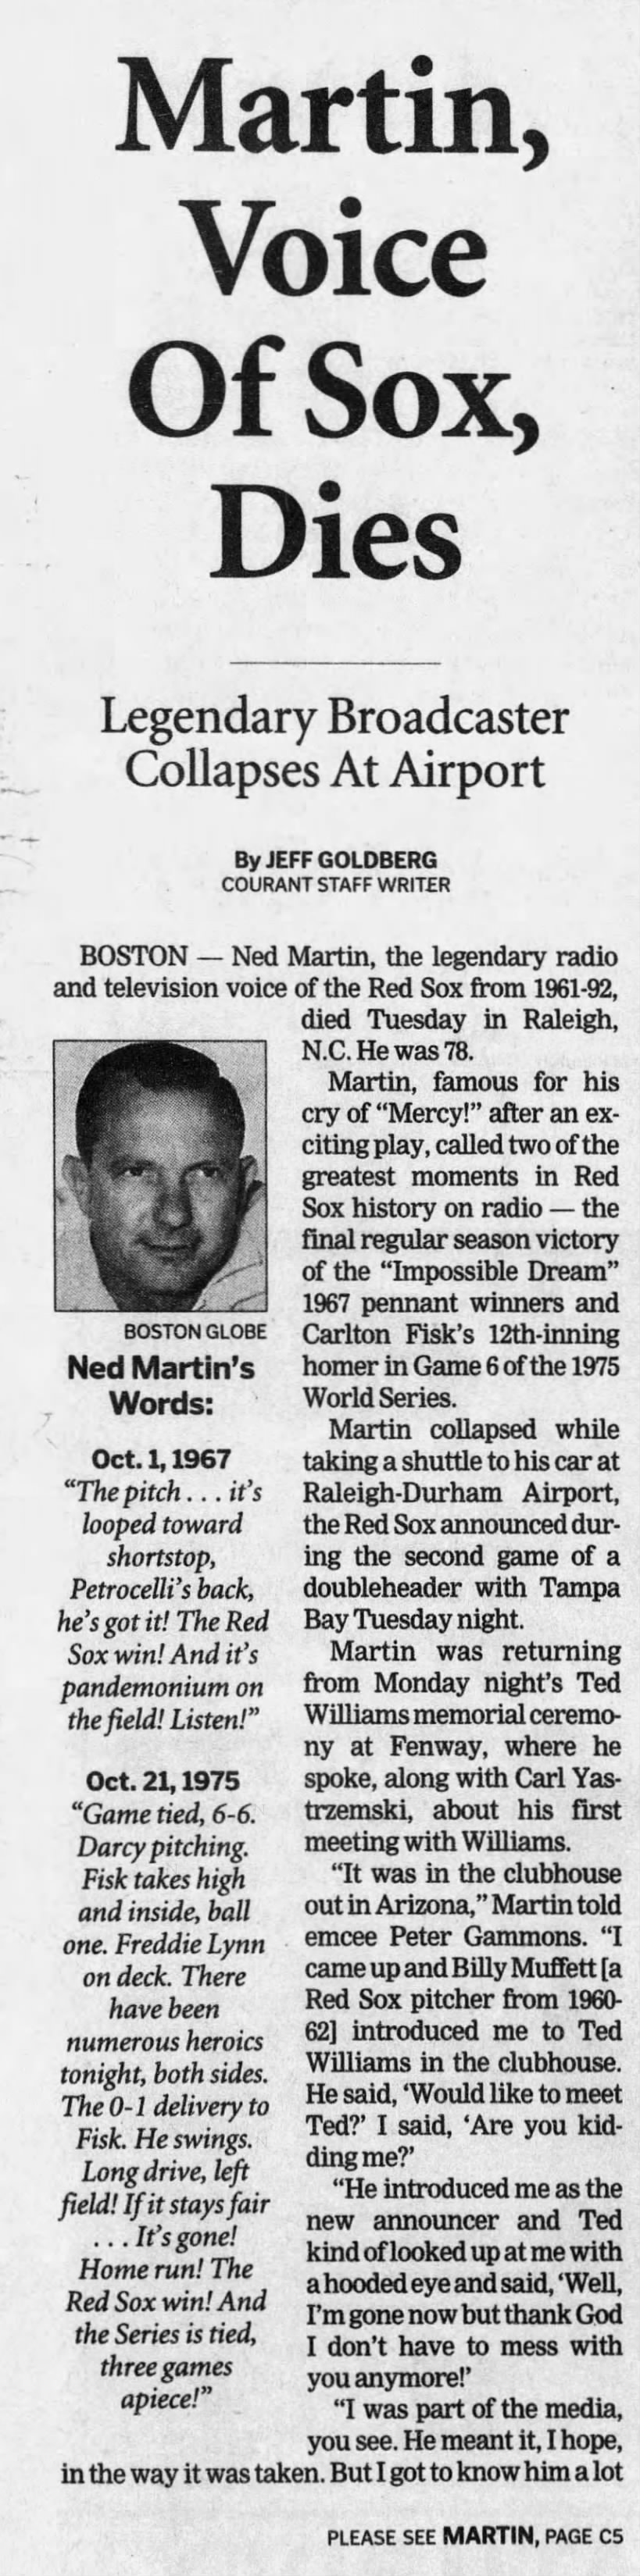 Martin, Voice Of Sox, Dies